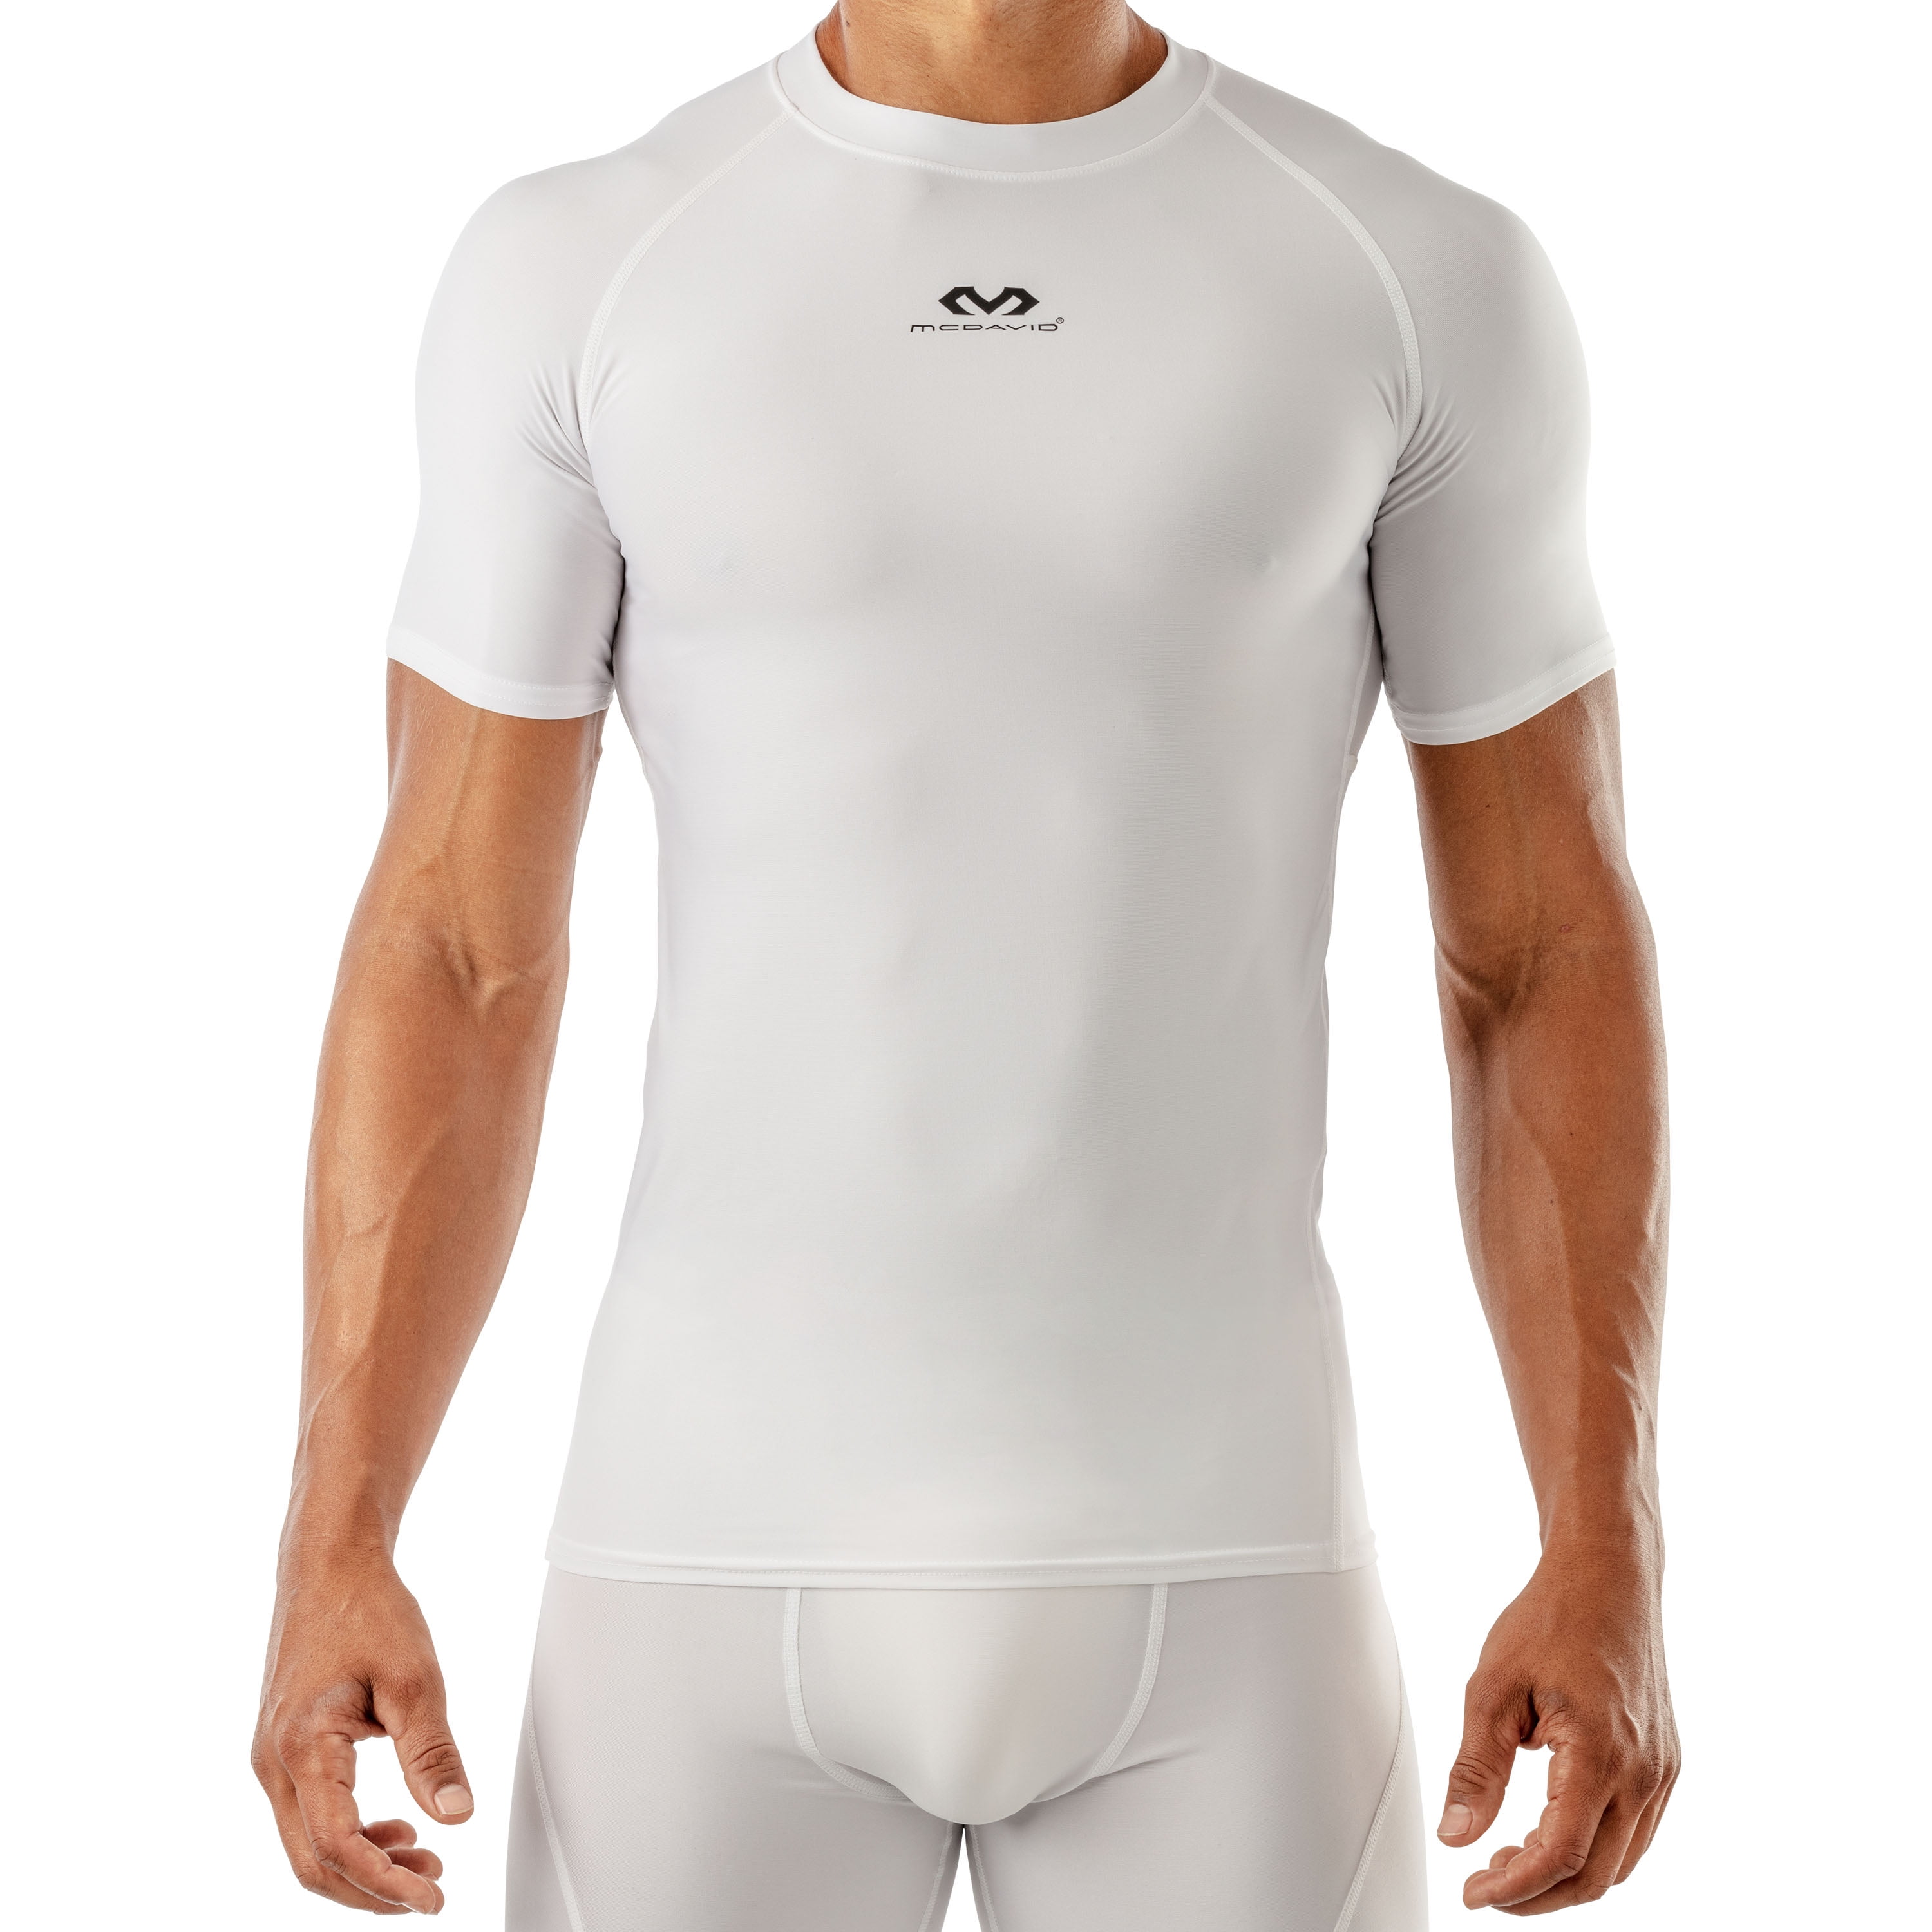 dood Specialiseren Prestatie McDavid Sport Compression Shirt With Short Sleeves, White, Adult Large -  Walmart.com